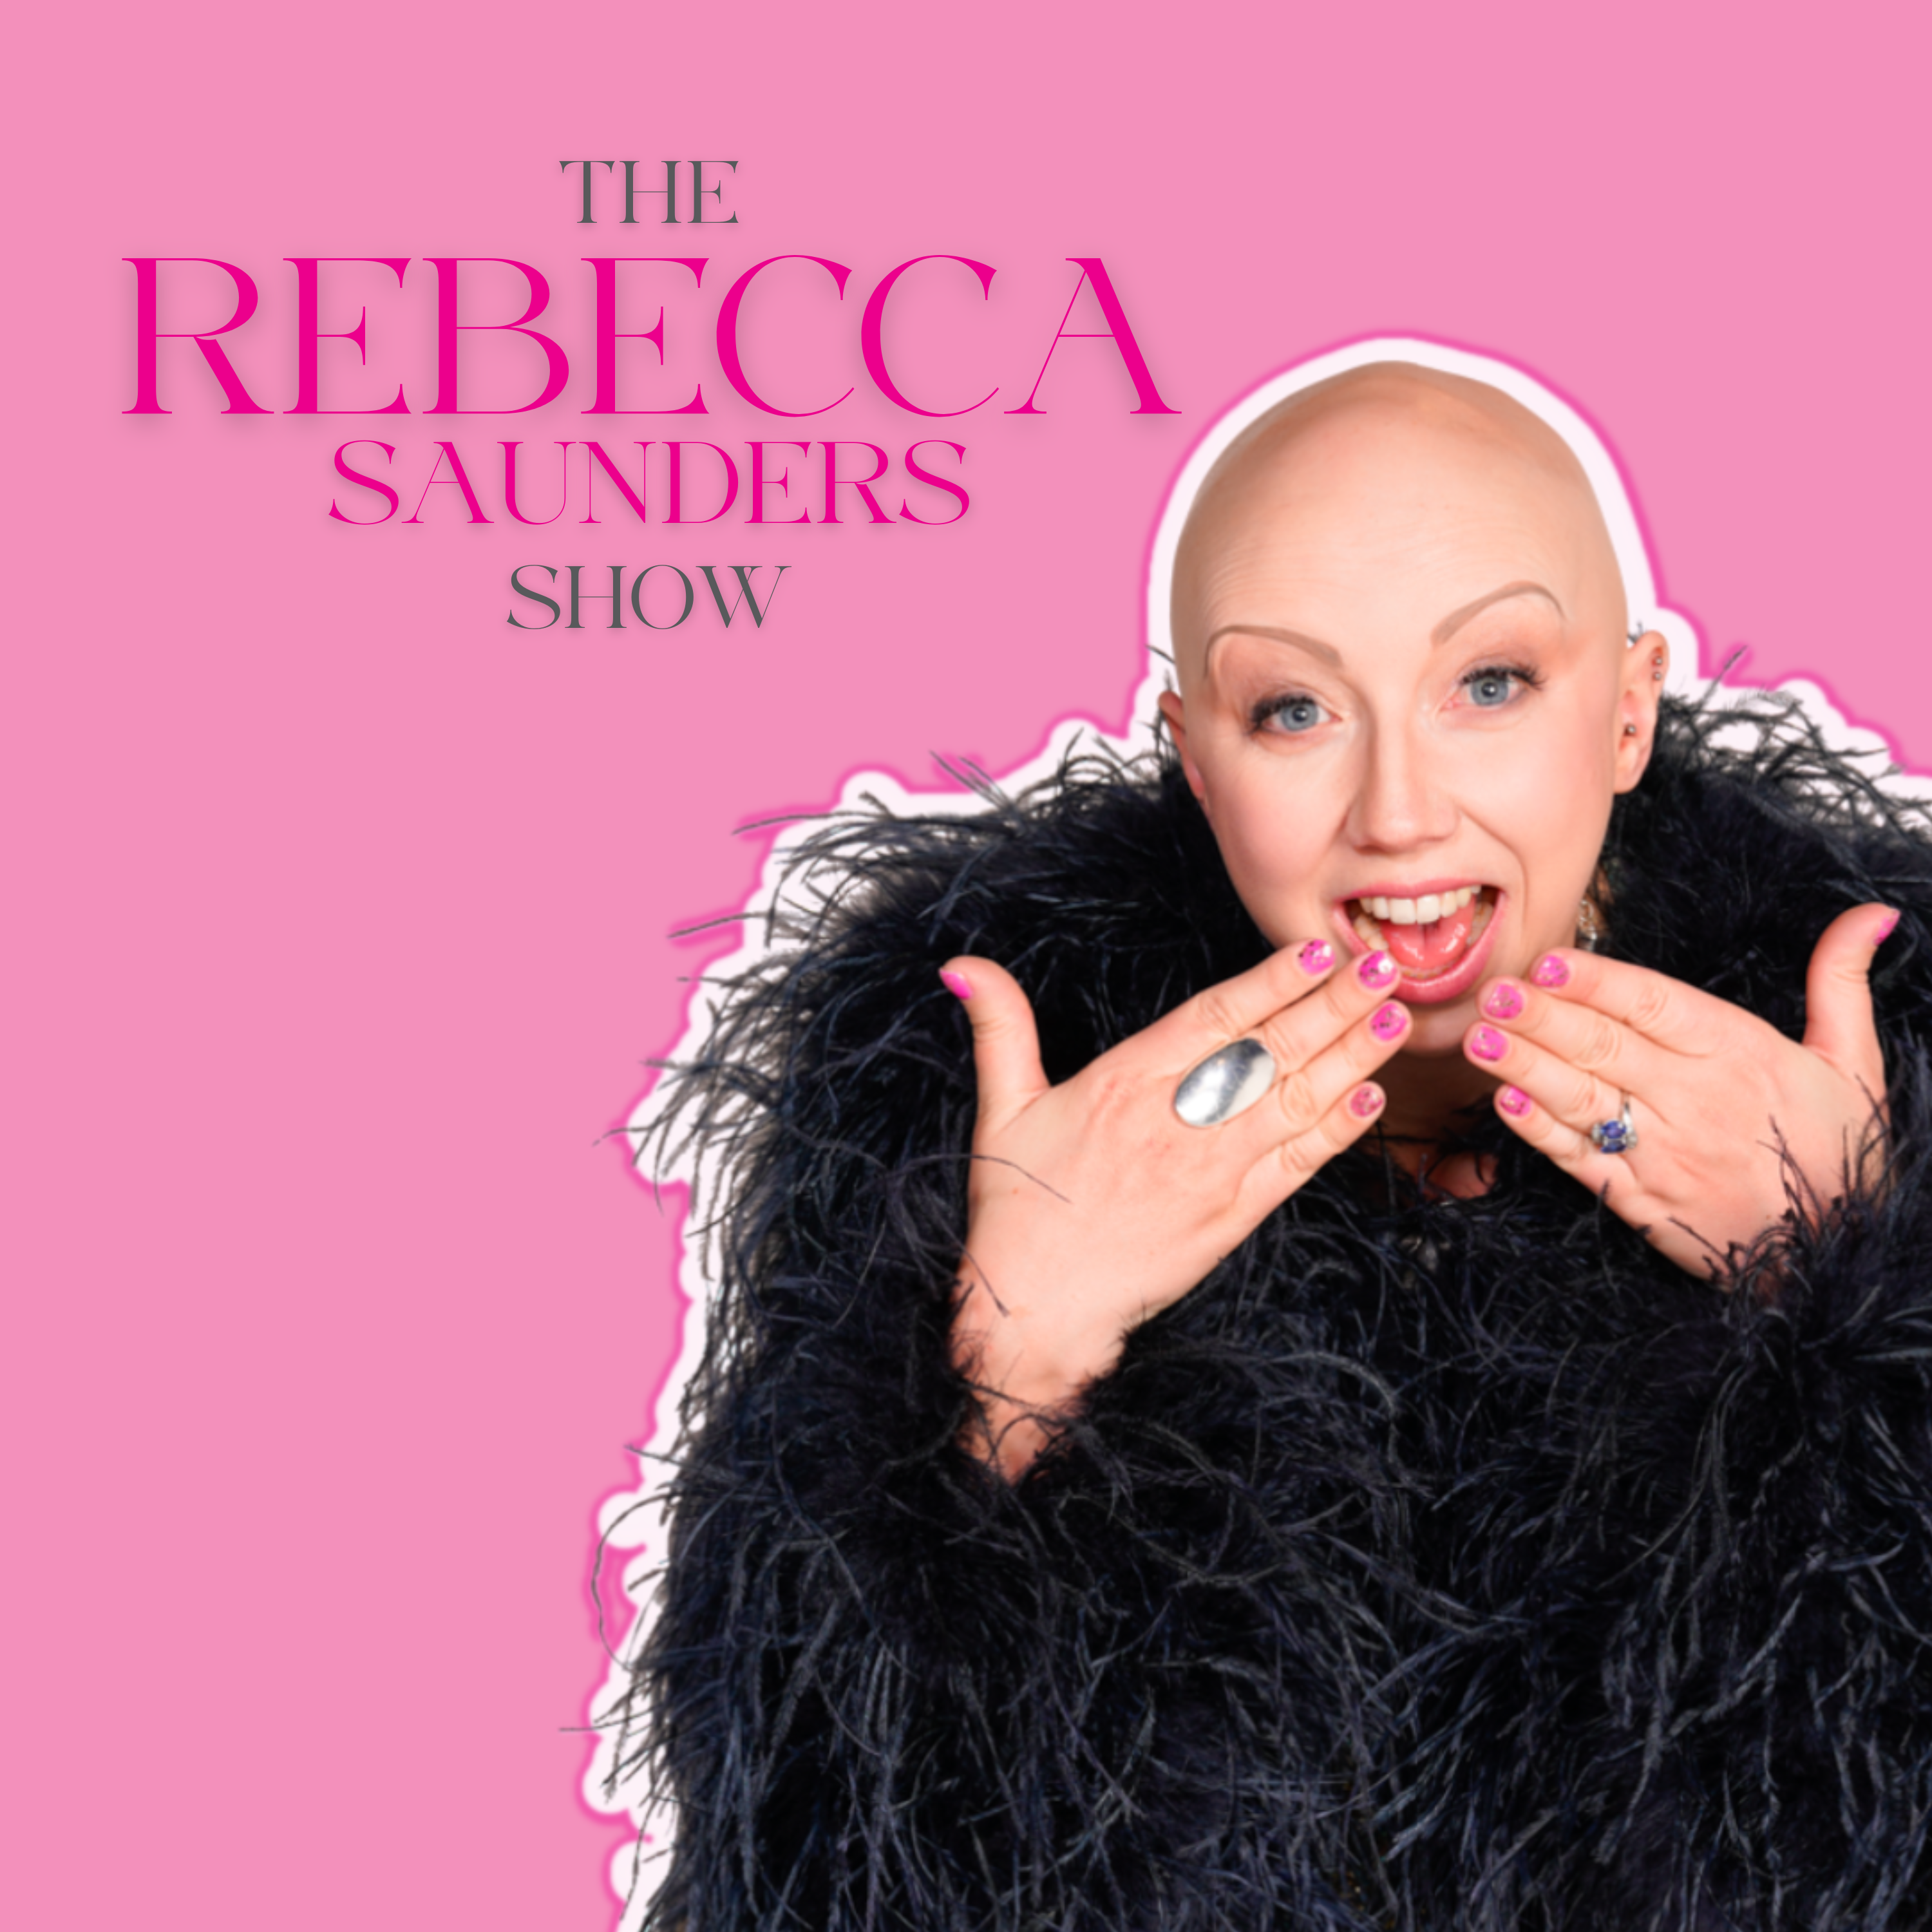 The Rebecca Saunders Show